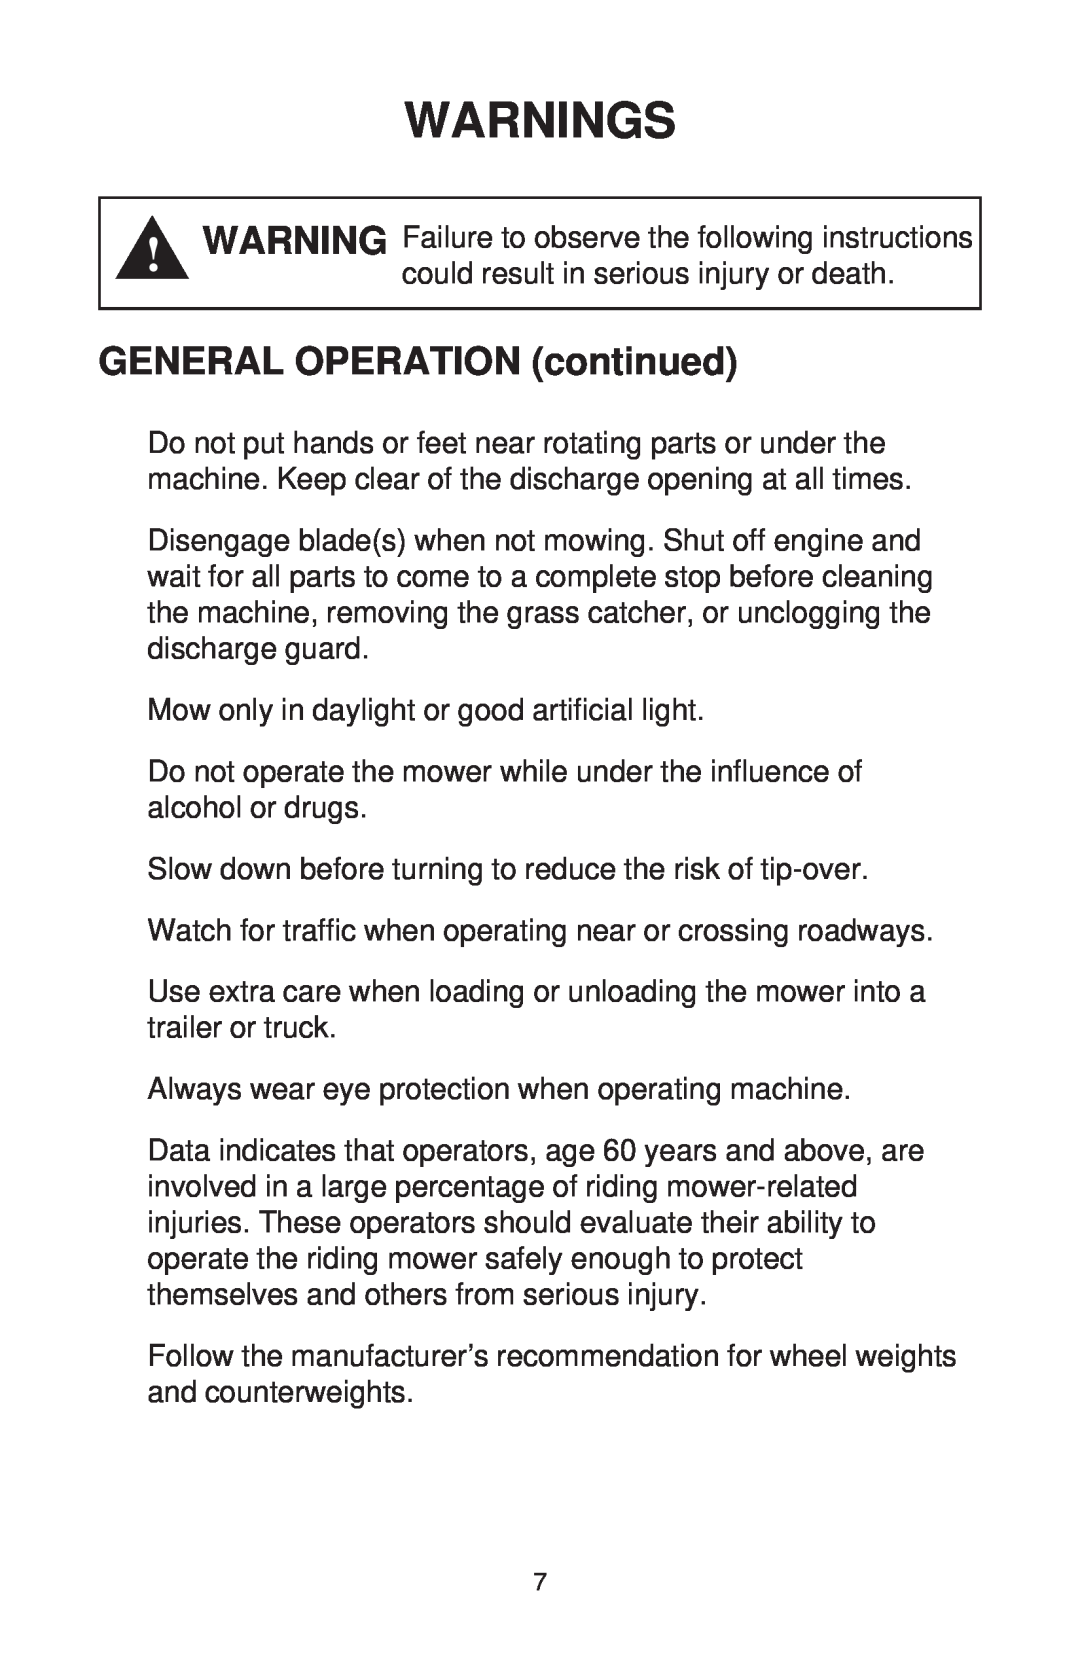 Dixon ZTR 44/968999538 manual GENERAL OPERATION continued, Warnings 